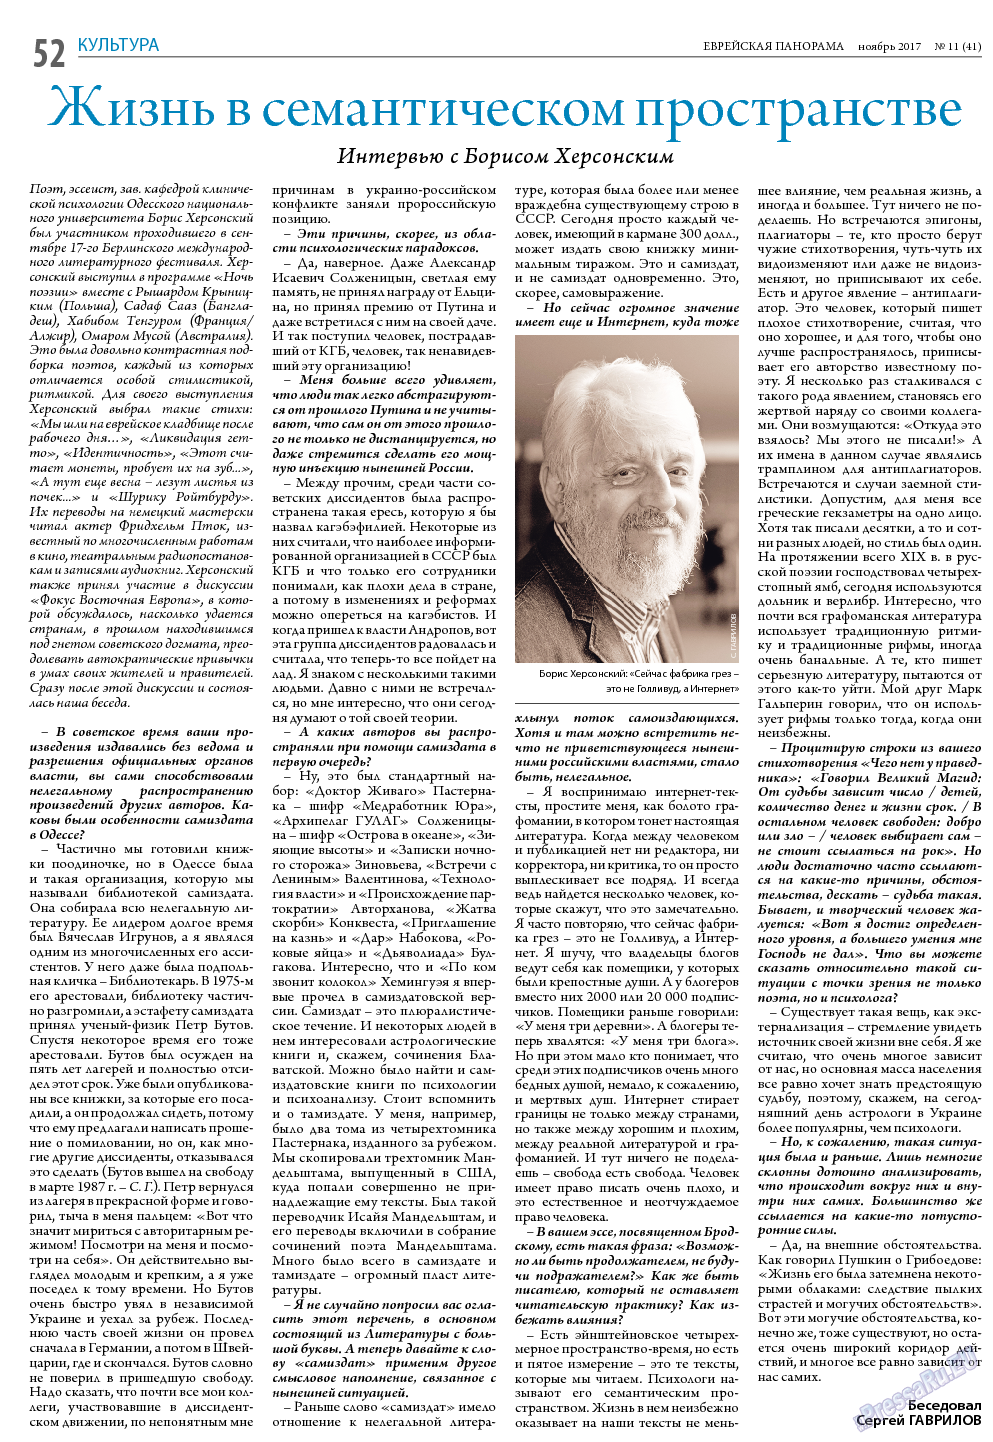 Еврейская панорама, газета. 2017 №11 стр.52